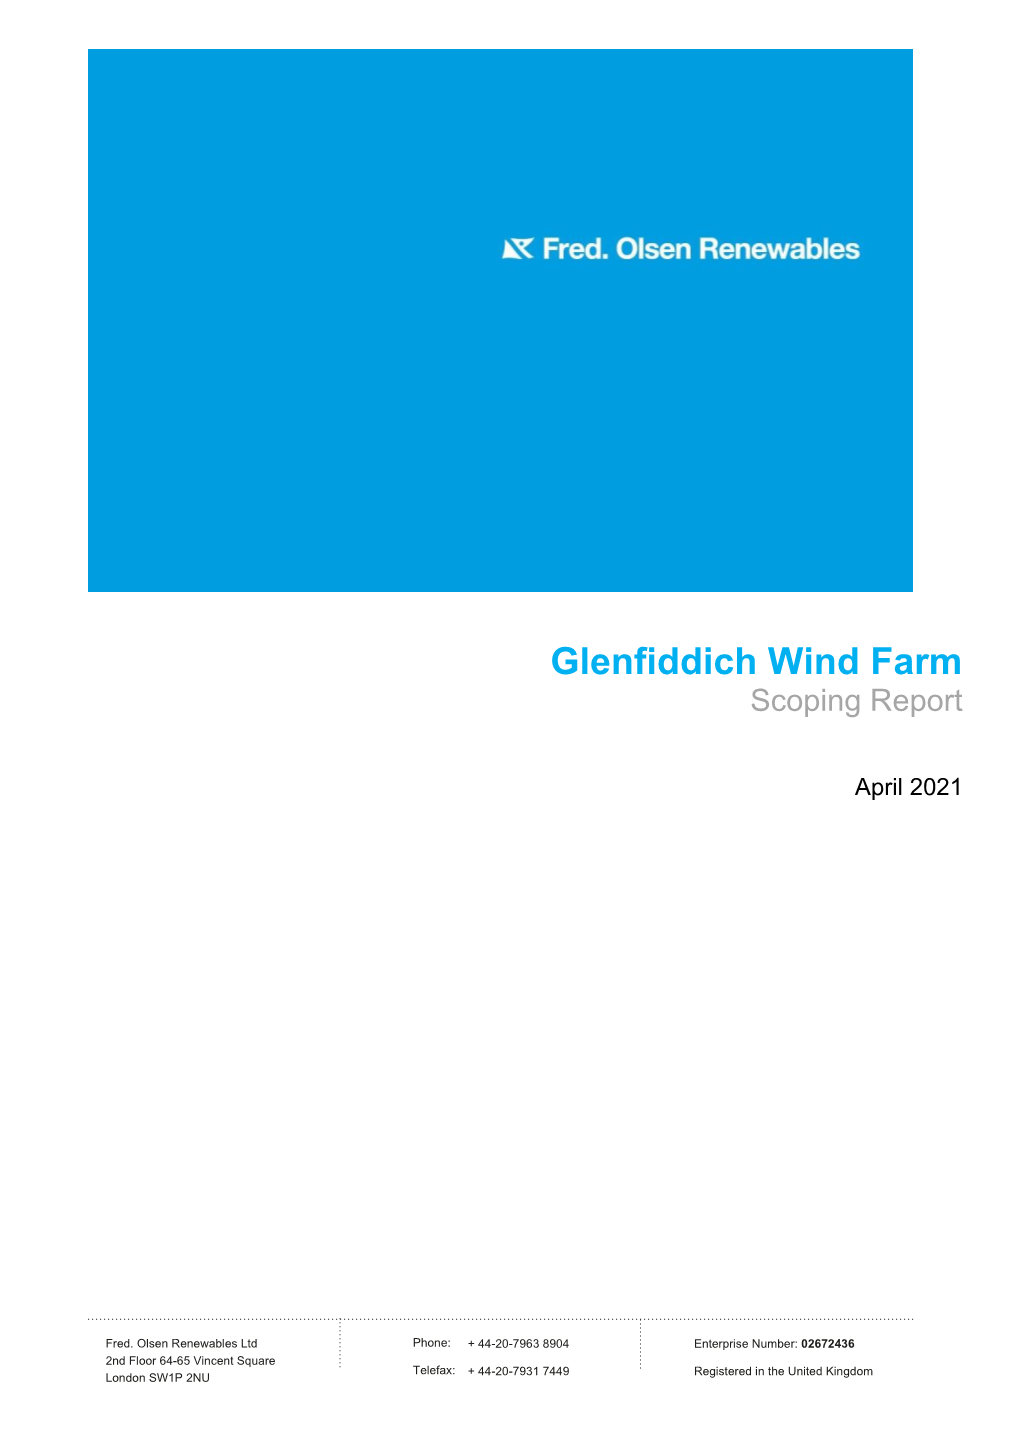 Glenfiddich Wind Farm Scoping Report